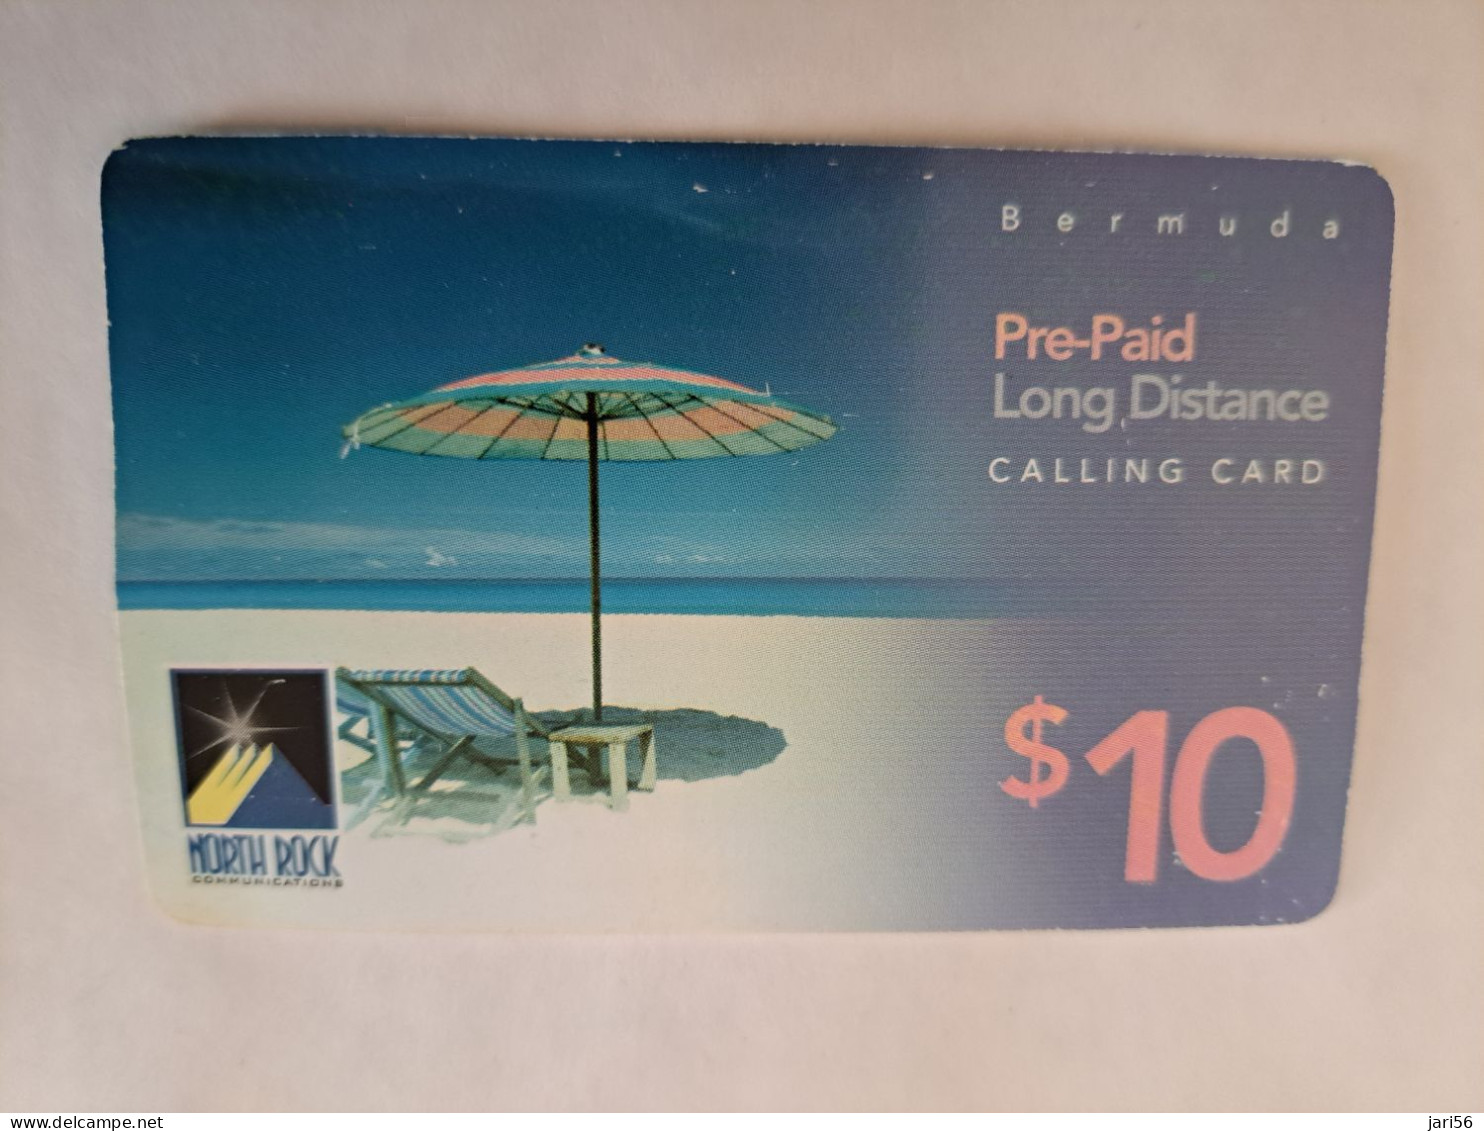 BERMUDA  $10,-,-NORTH ROCK   BERMUDA / PARASOL ON BEACH /  3/2005/   PREPAID CARD  Fine USED  **14794** - Bermuda